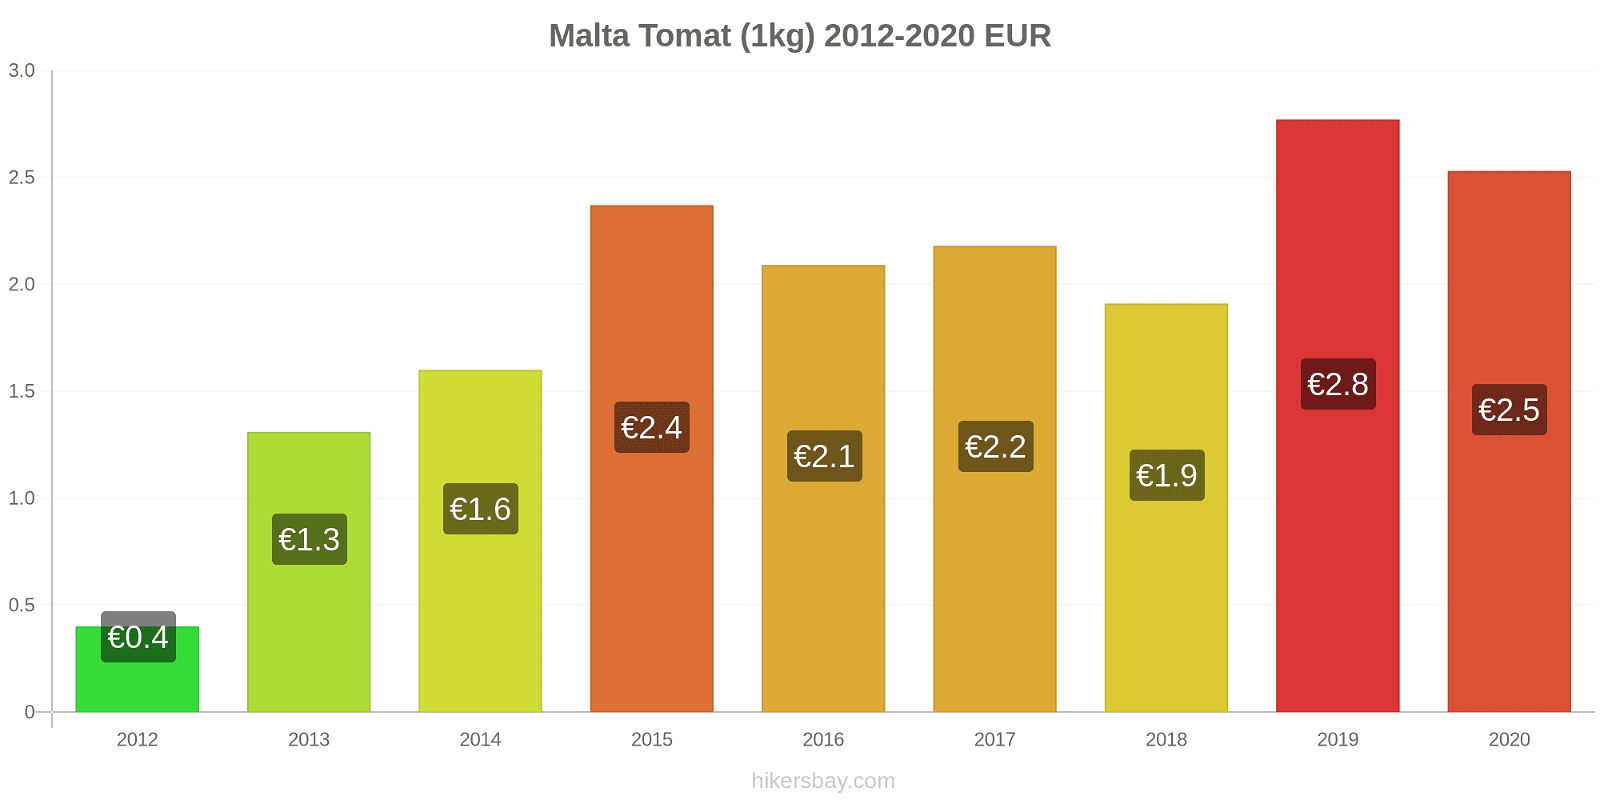 Malta prisendringer Tomat (1kg) hikersbay.com